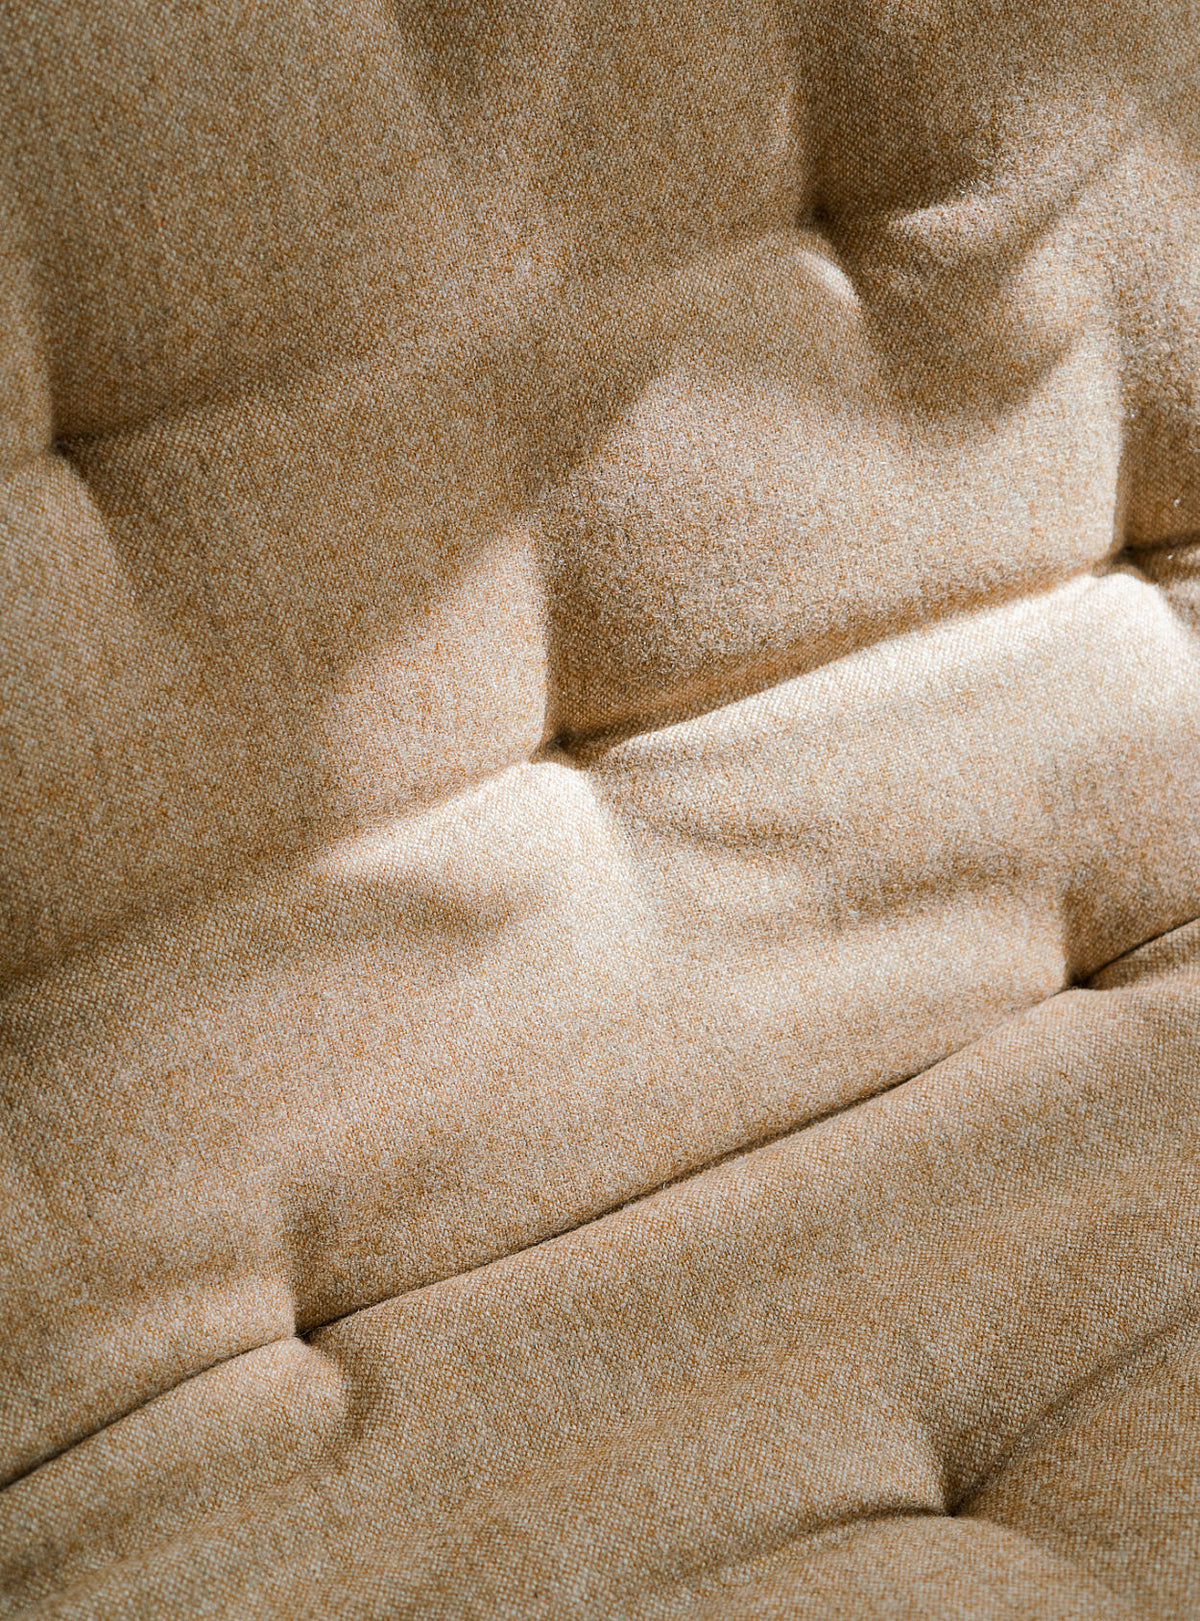 Scandi Lux Nett Cushion by Fjordfiesta